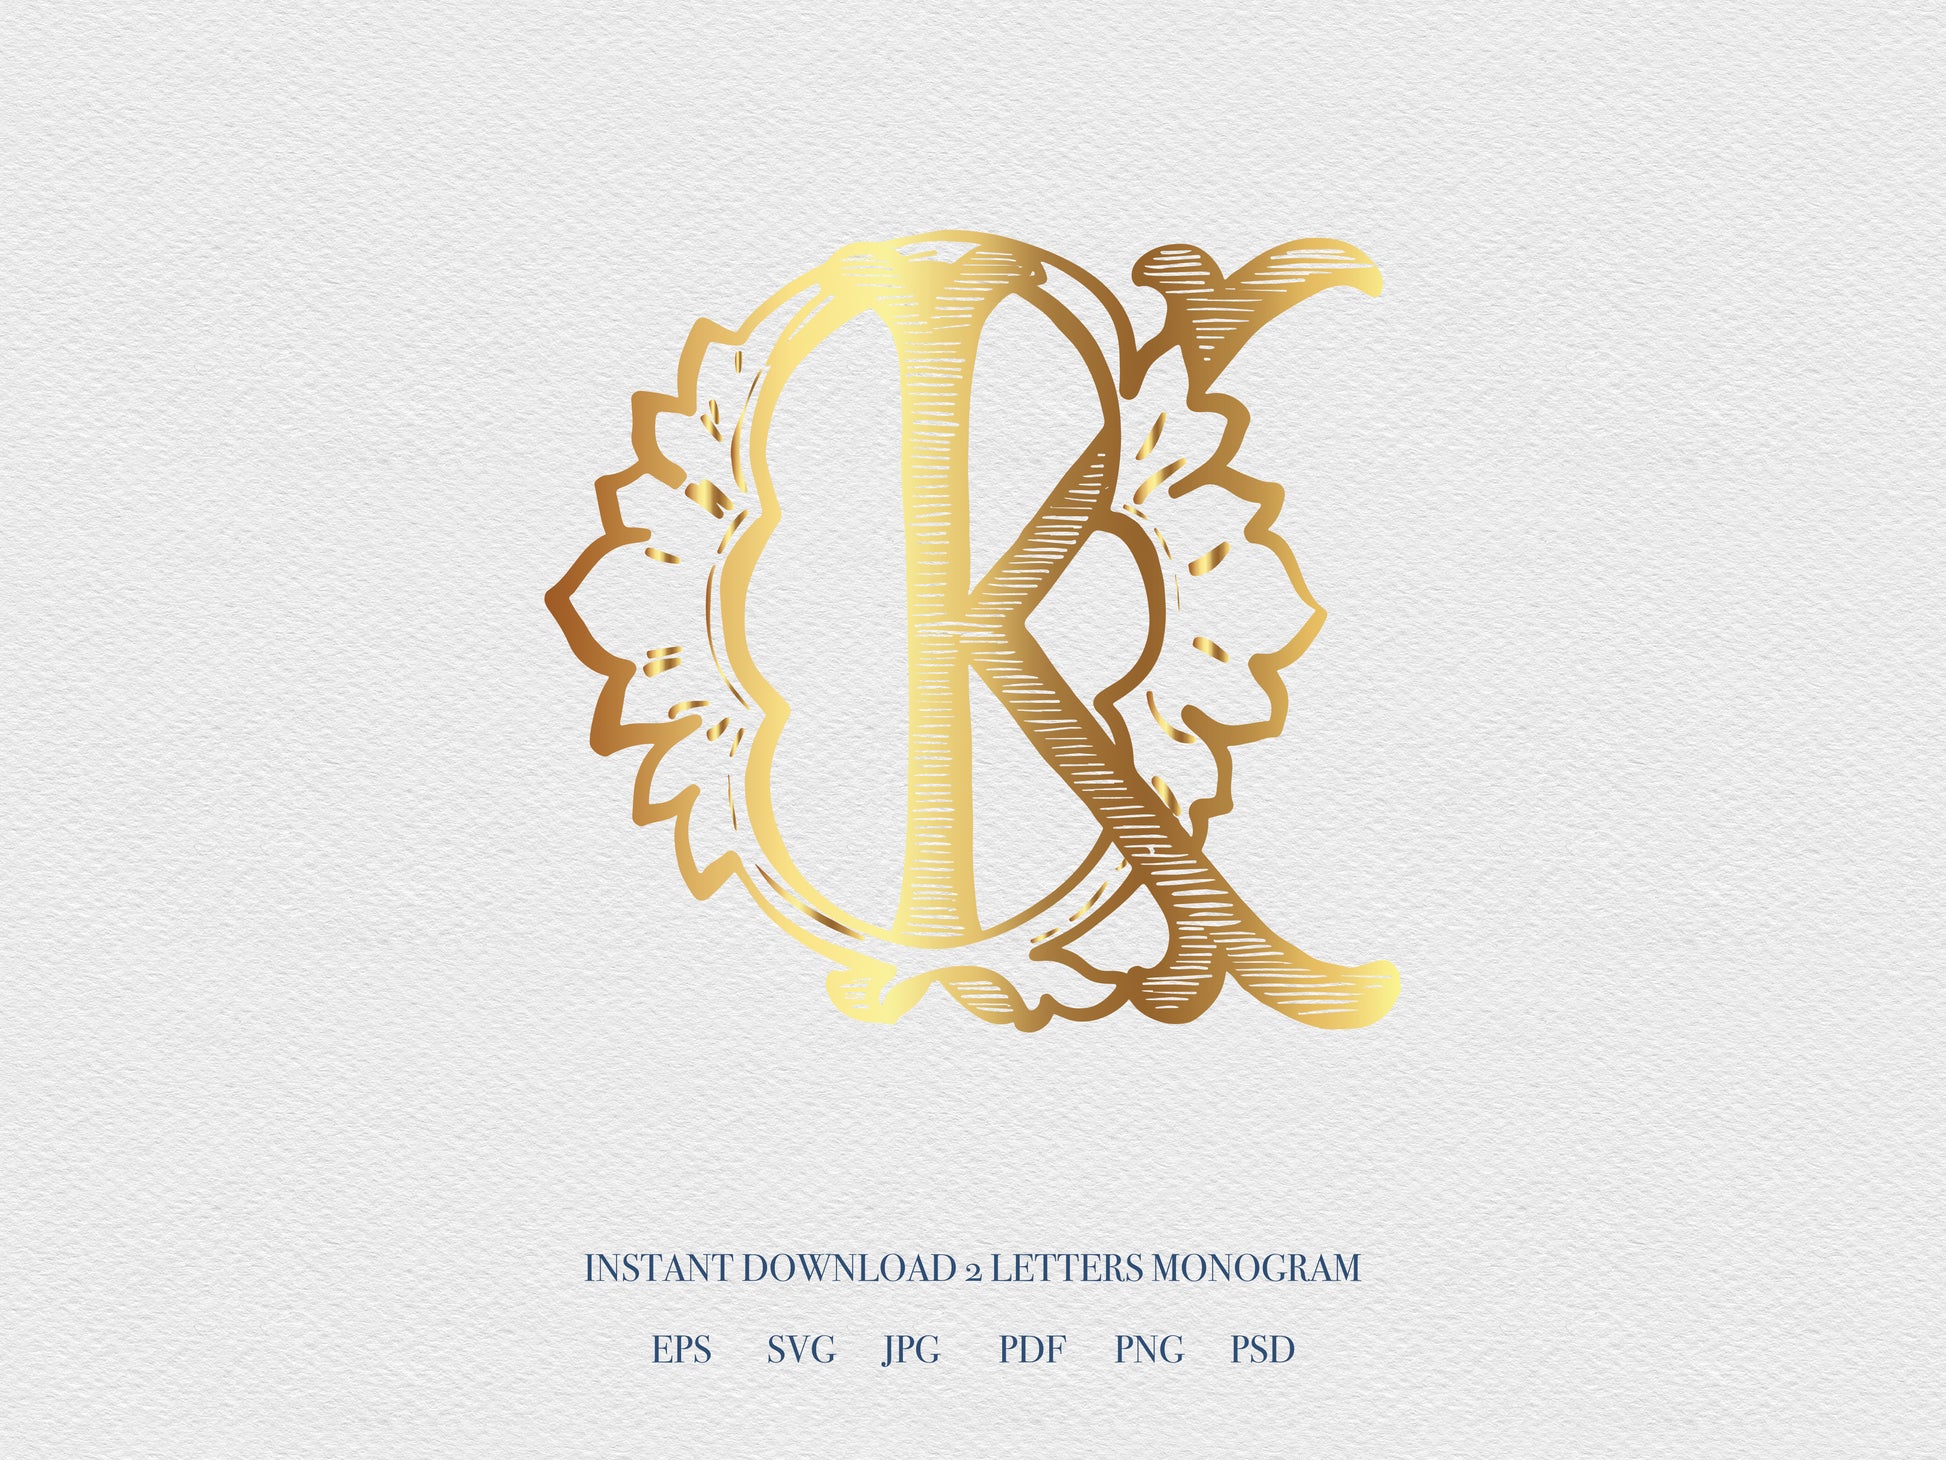 2 Letter Monogram with Letters KQ QK | Digital Download - Wedding Monogram SVG, Personal Logo, Wedding Logo for Wedding Invitations The Wedding Crest Lab